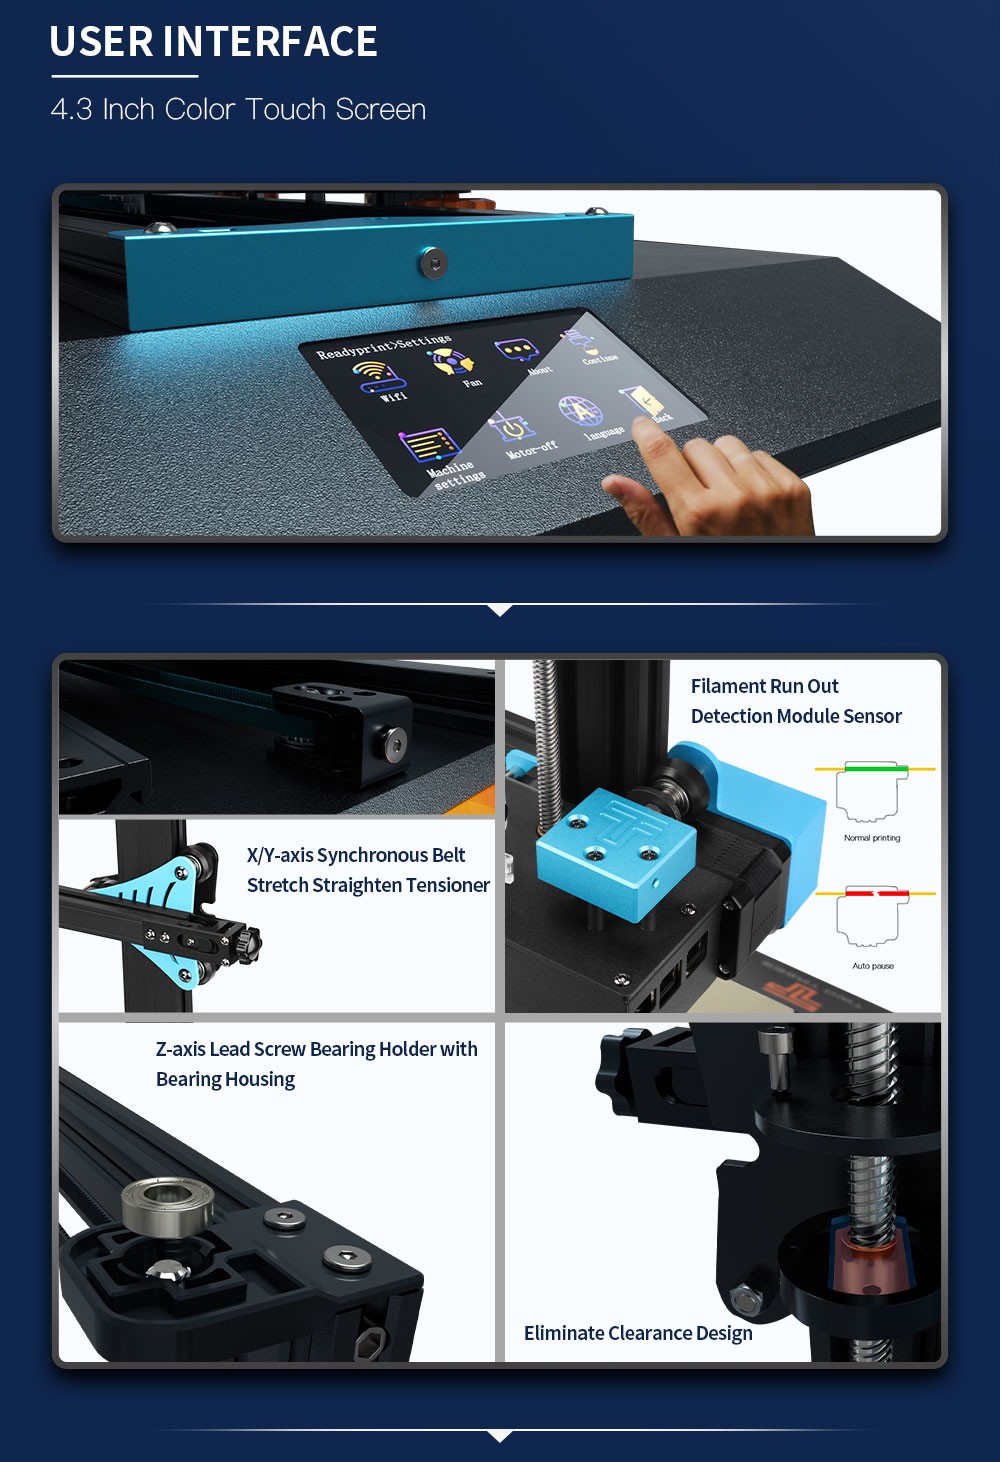 Twotress Bluer Plus 3D-Drucker Auto Leveling TMC2209/MKS Robin Nano/Power Resume/Filament Runout Detection 300x300x400m